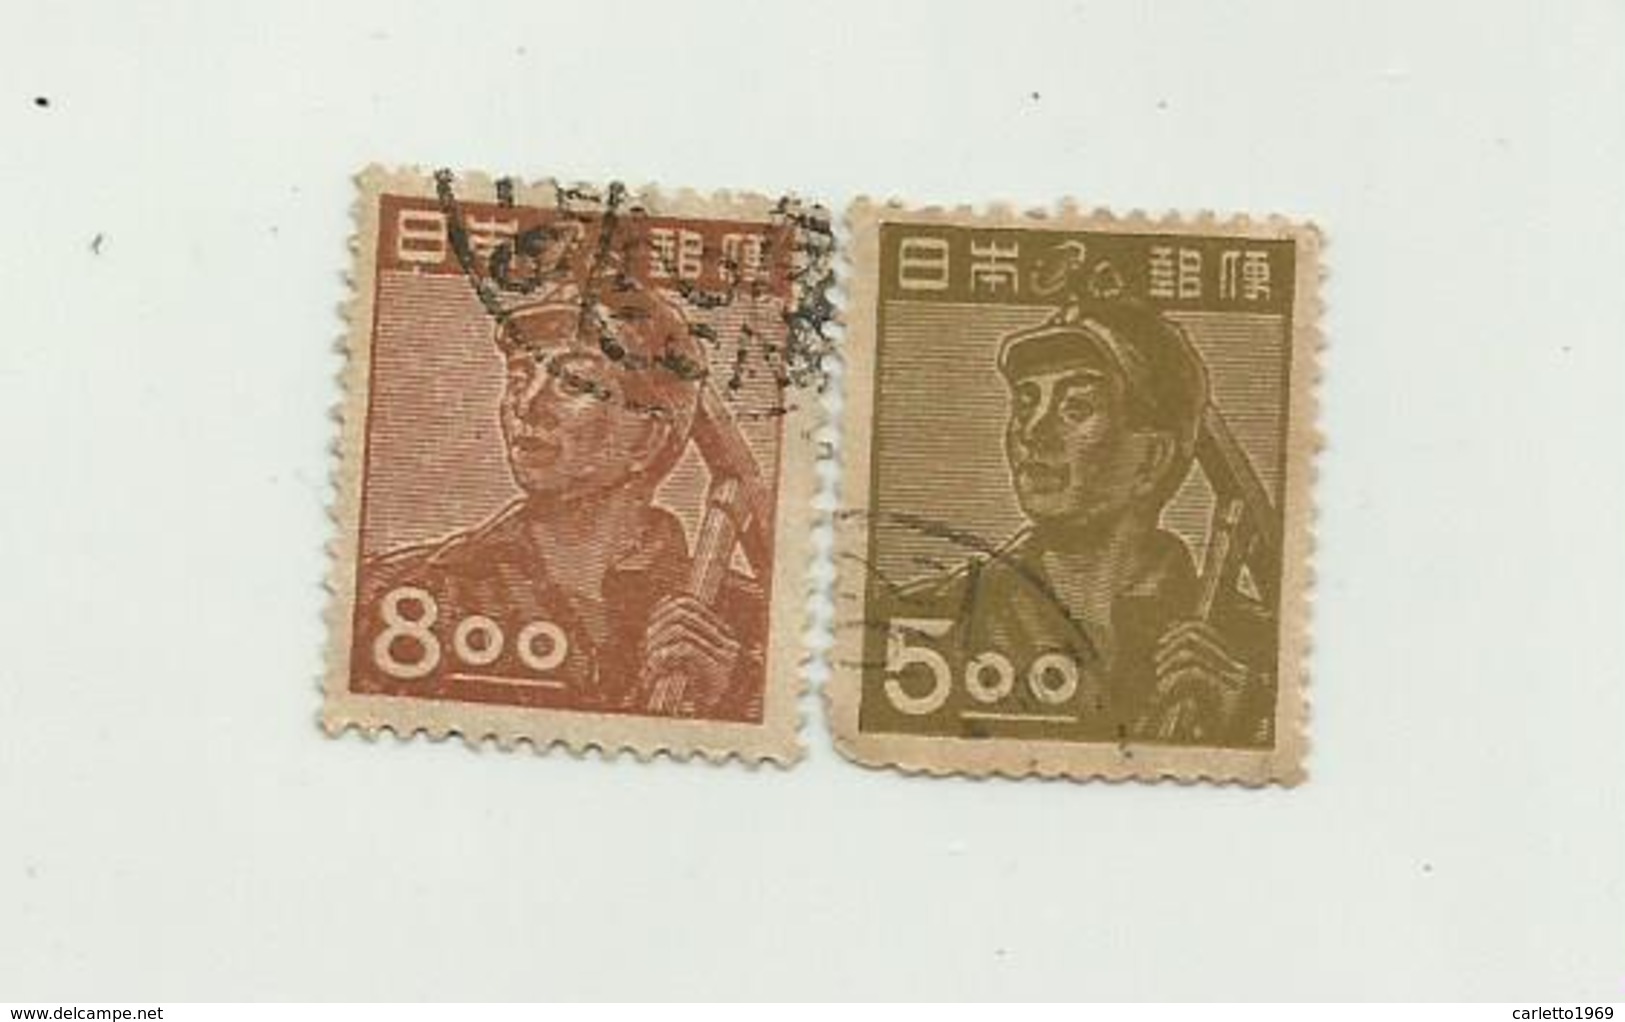 2 Francobolli Giappone Da 800 E 500 - Used Stamps